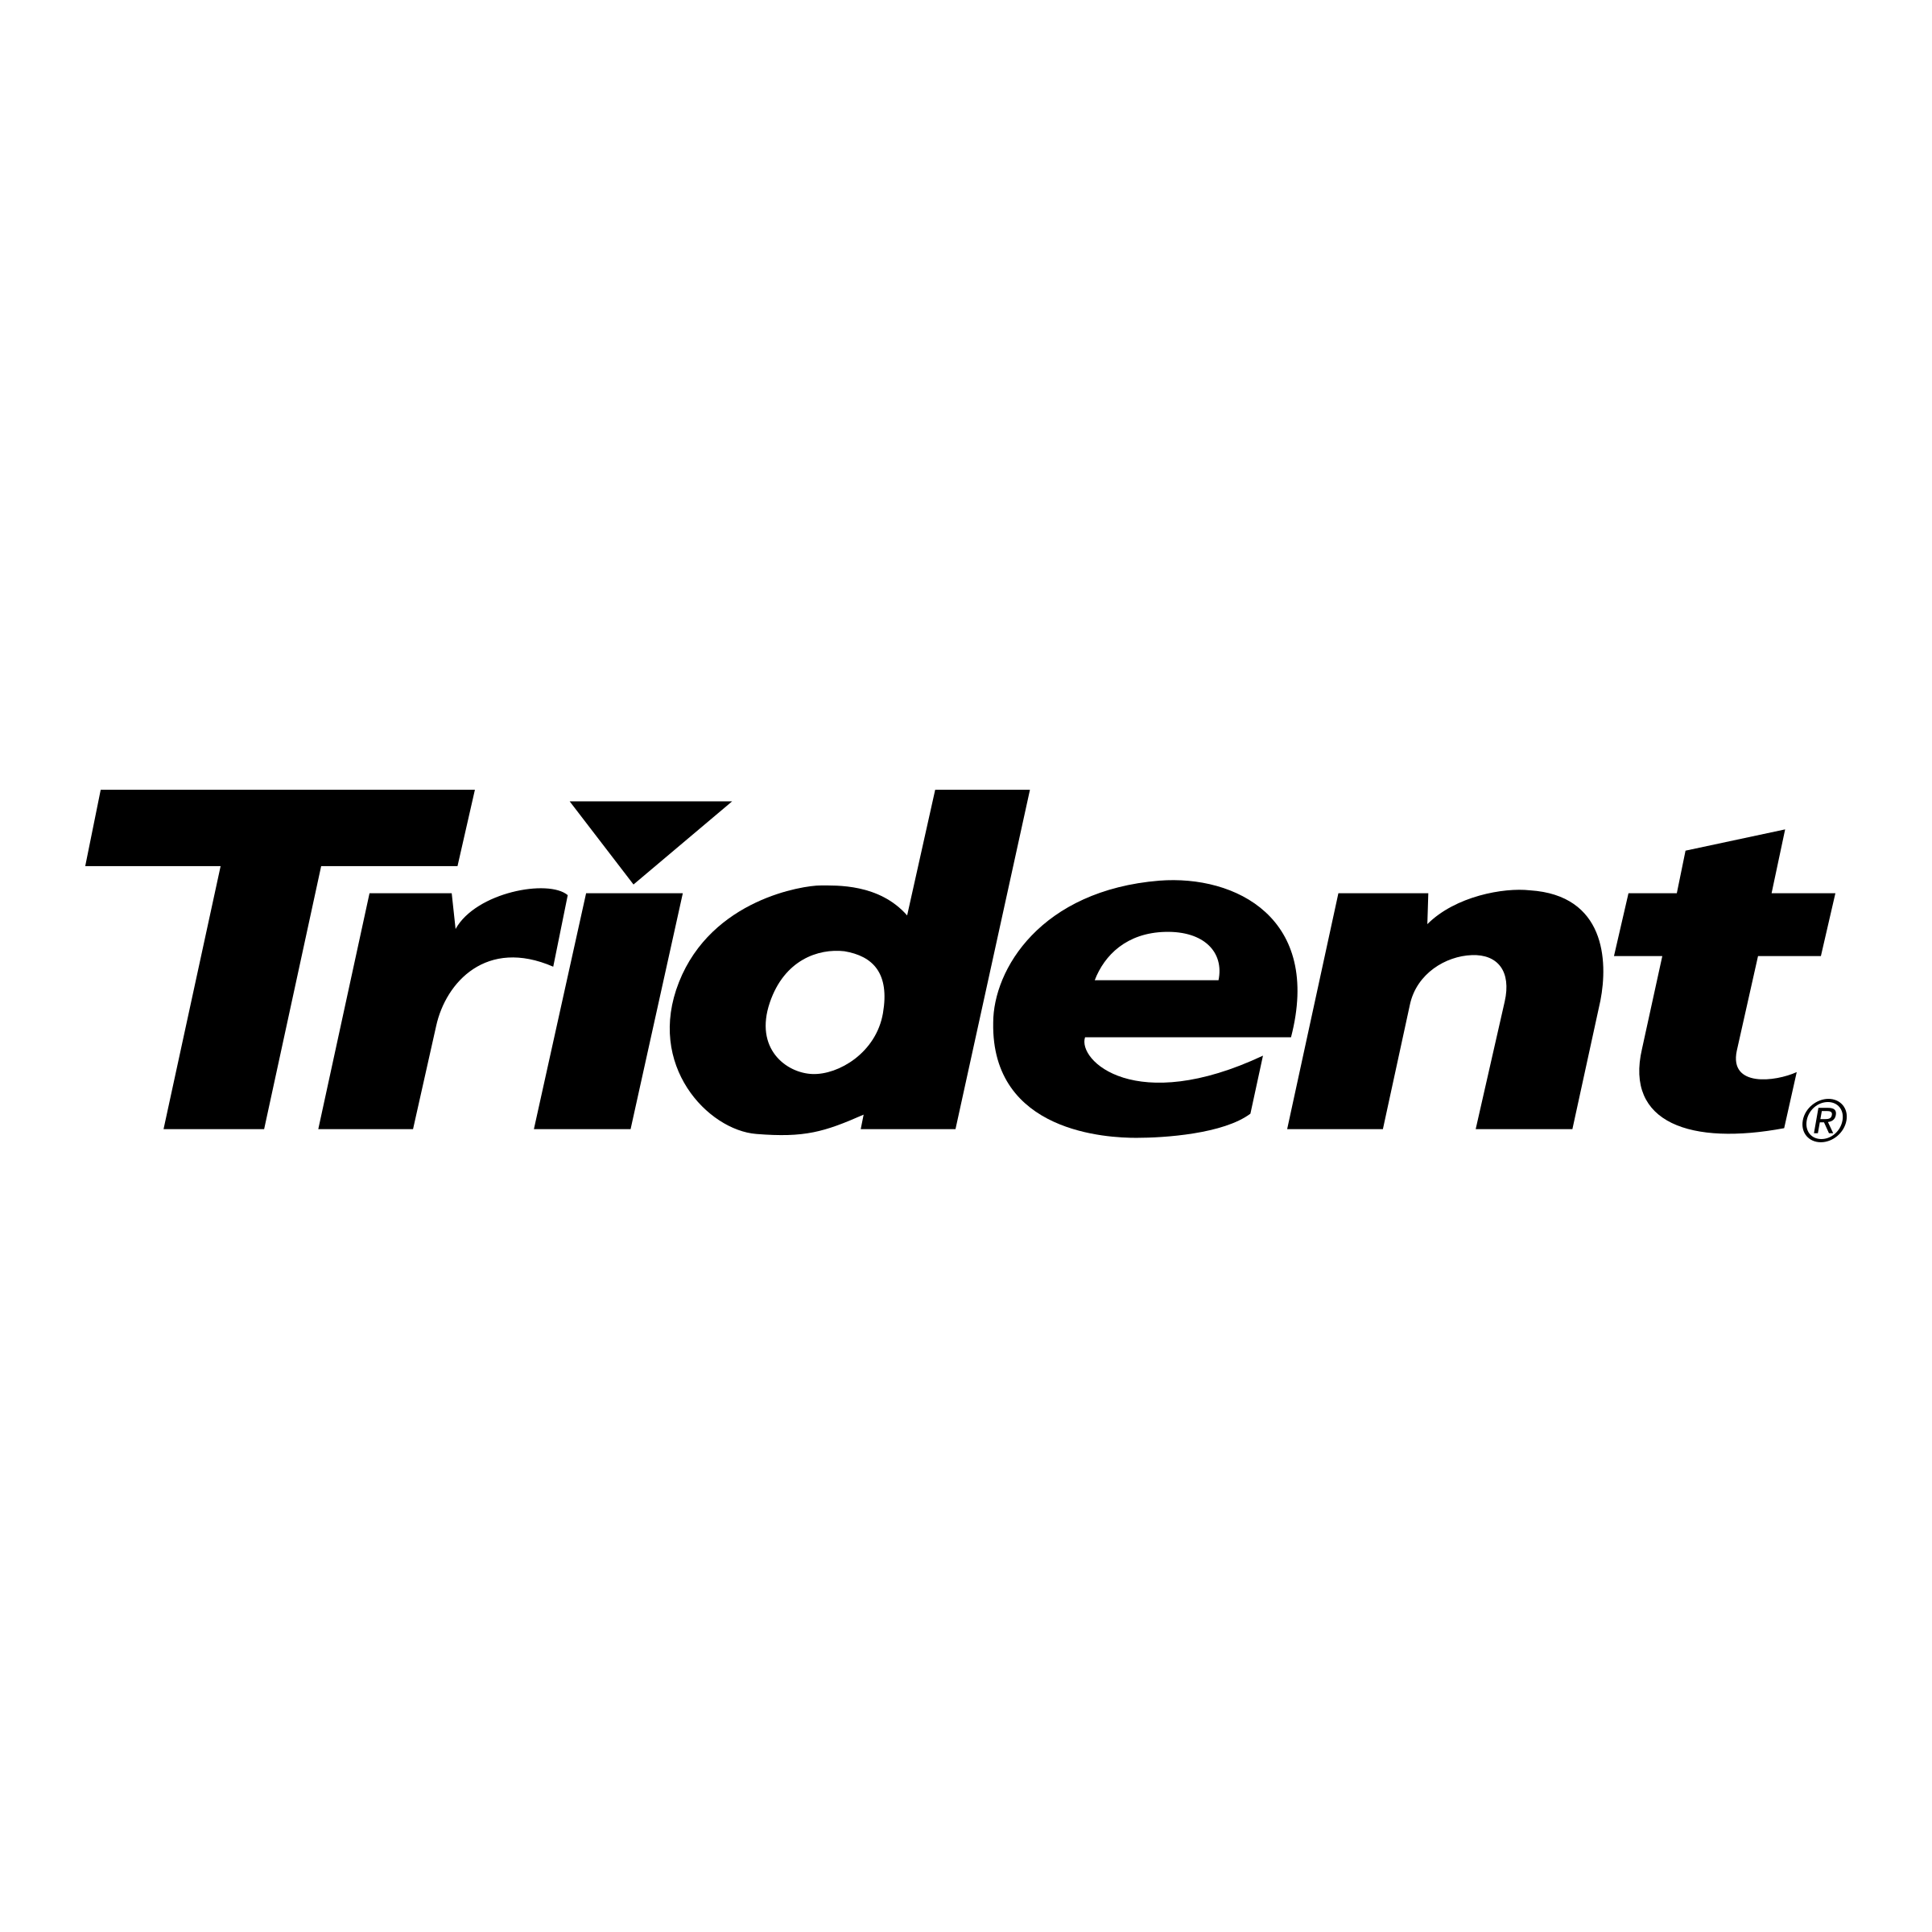 Trident Logo - Trident Logo PNG Transparent & SVG Vector - Freebie Supply